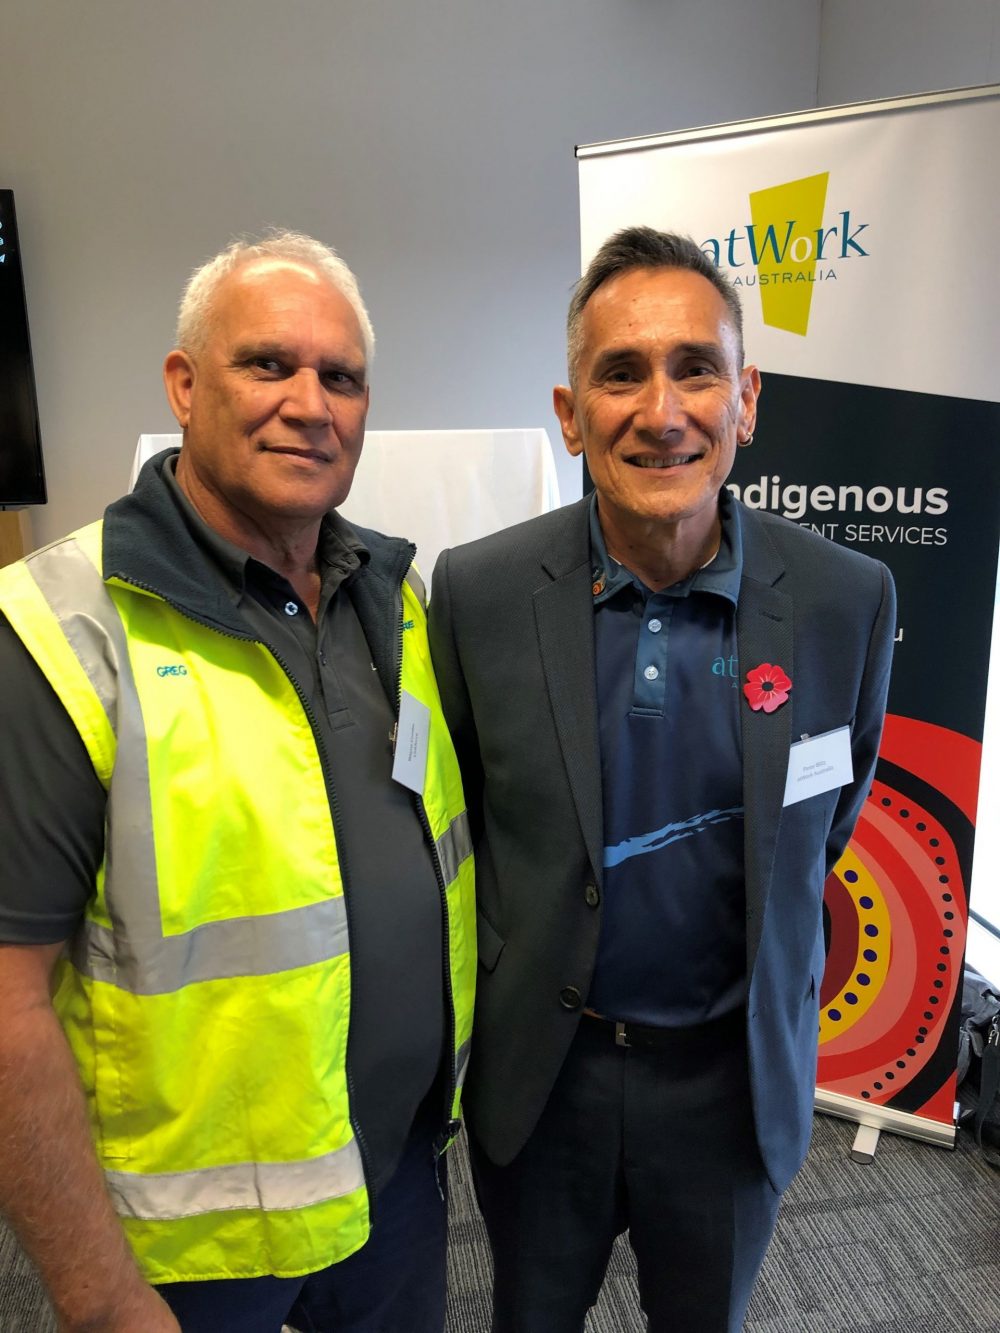 atWork Australia Celebrates NAIDOC Week 2020 and New Indigenous Employment Services